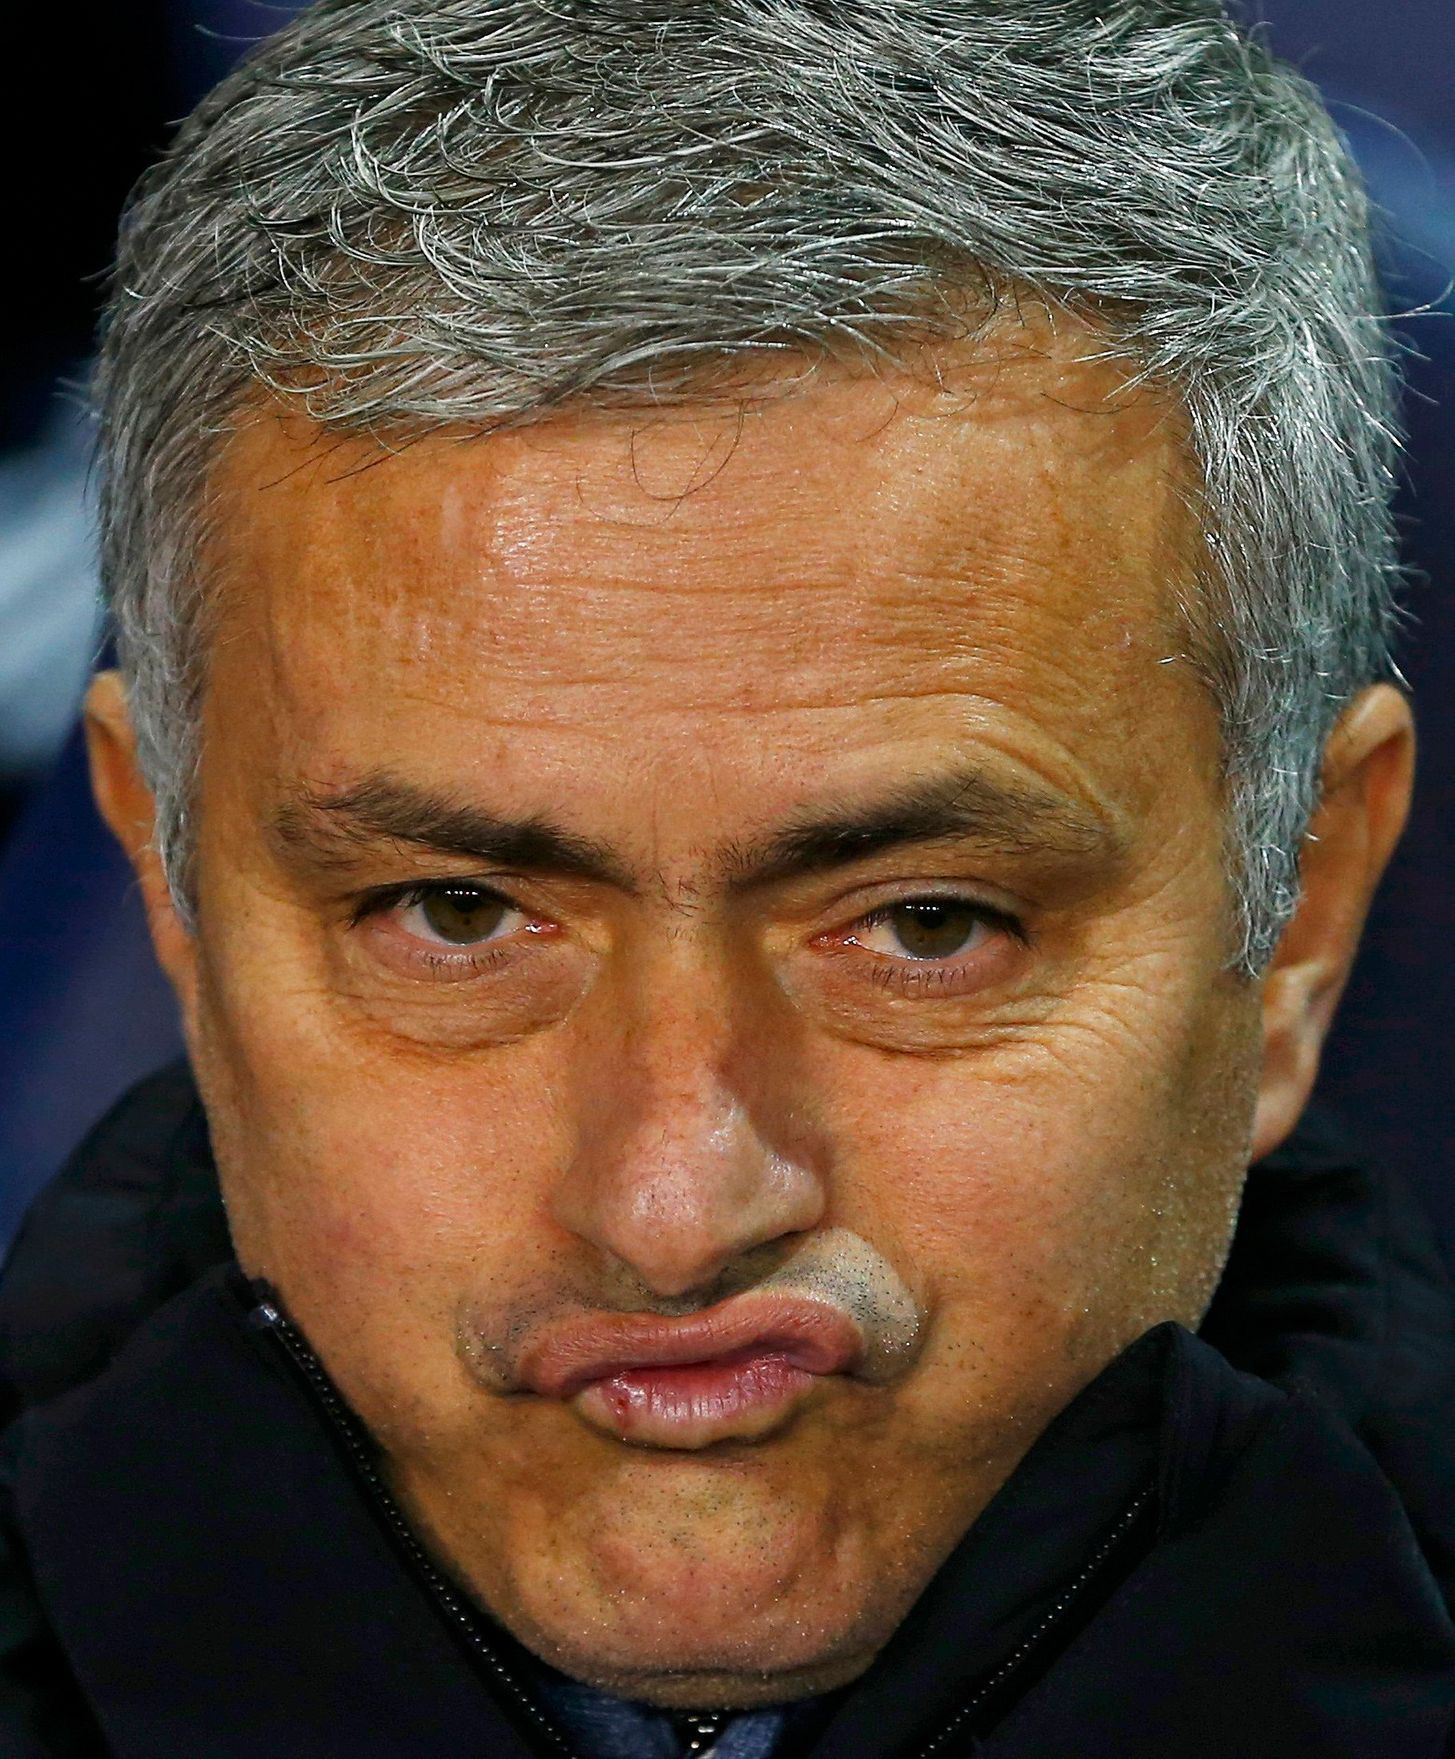 PL, Tottenham - Chelsea: Jose Mourinho